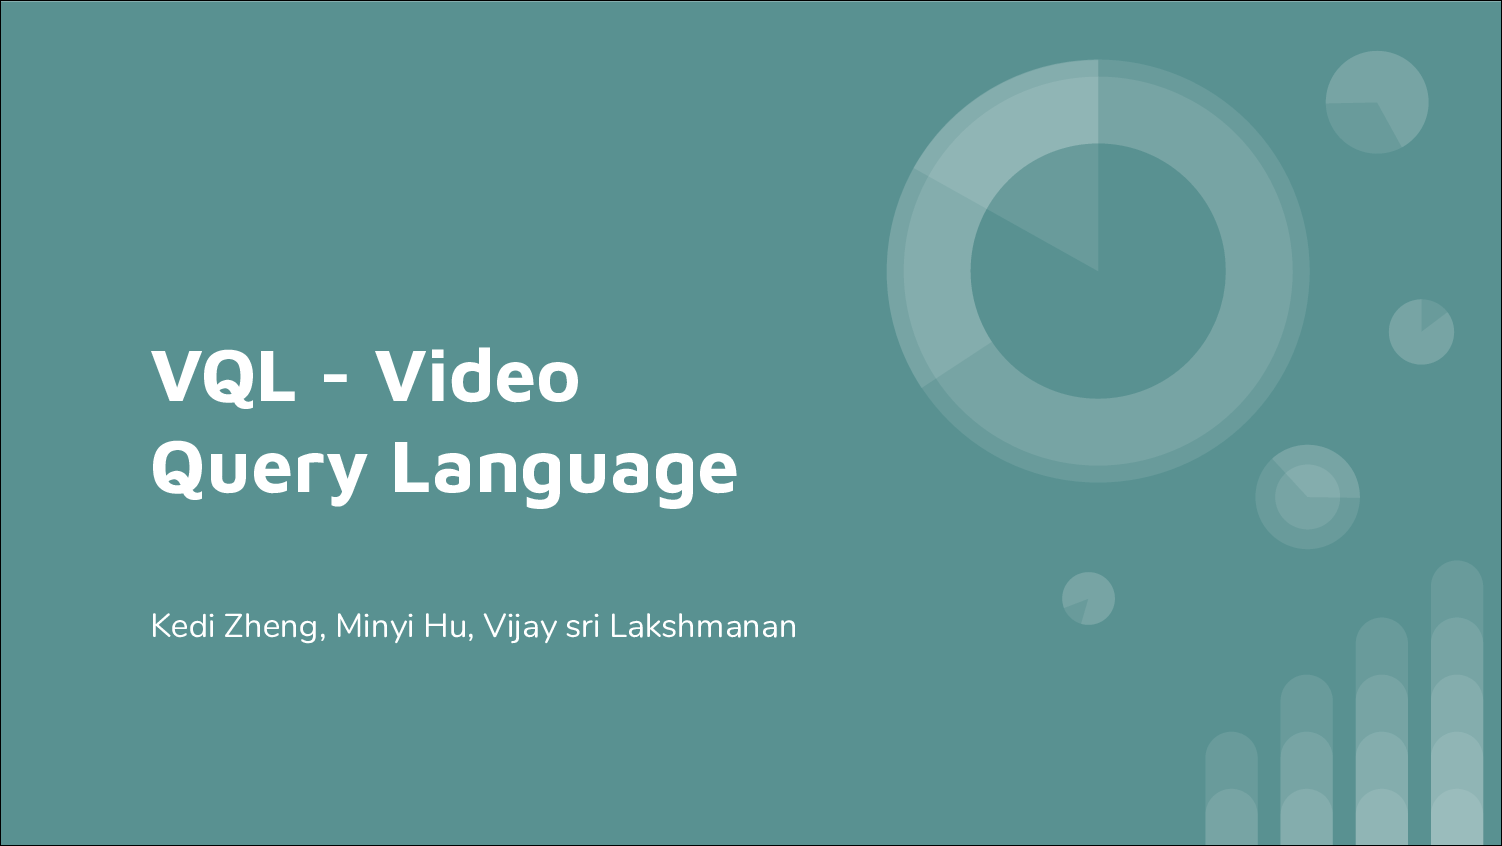 [PRESENTATION] VQL: Video Query Language